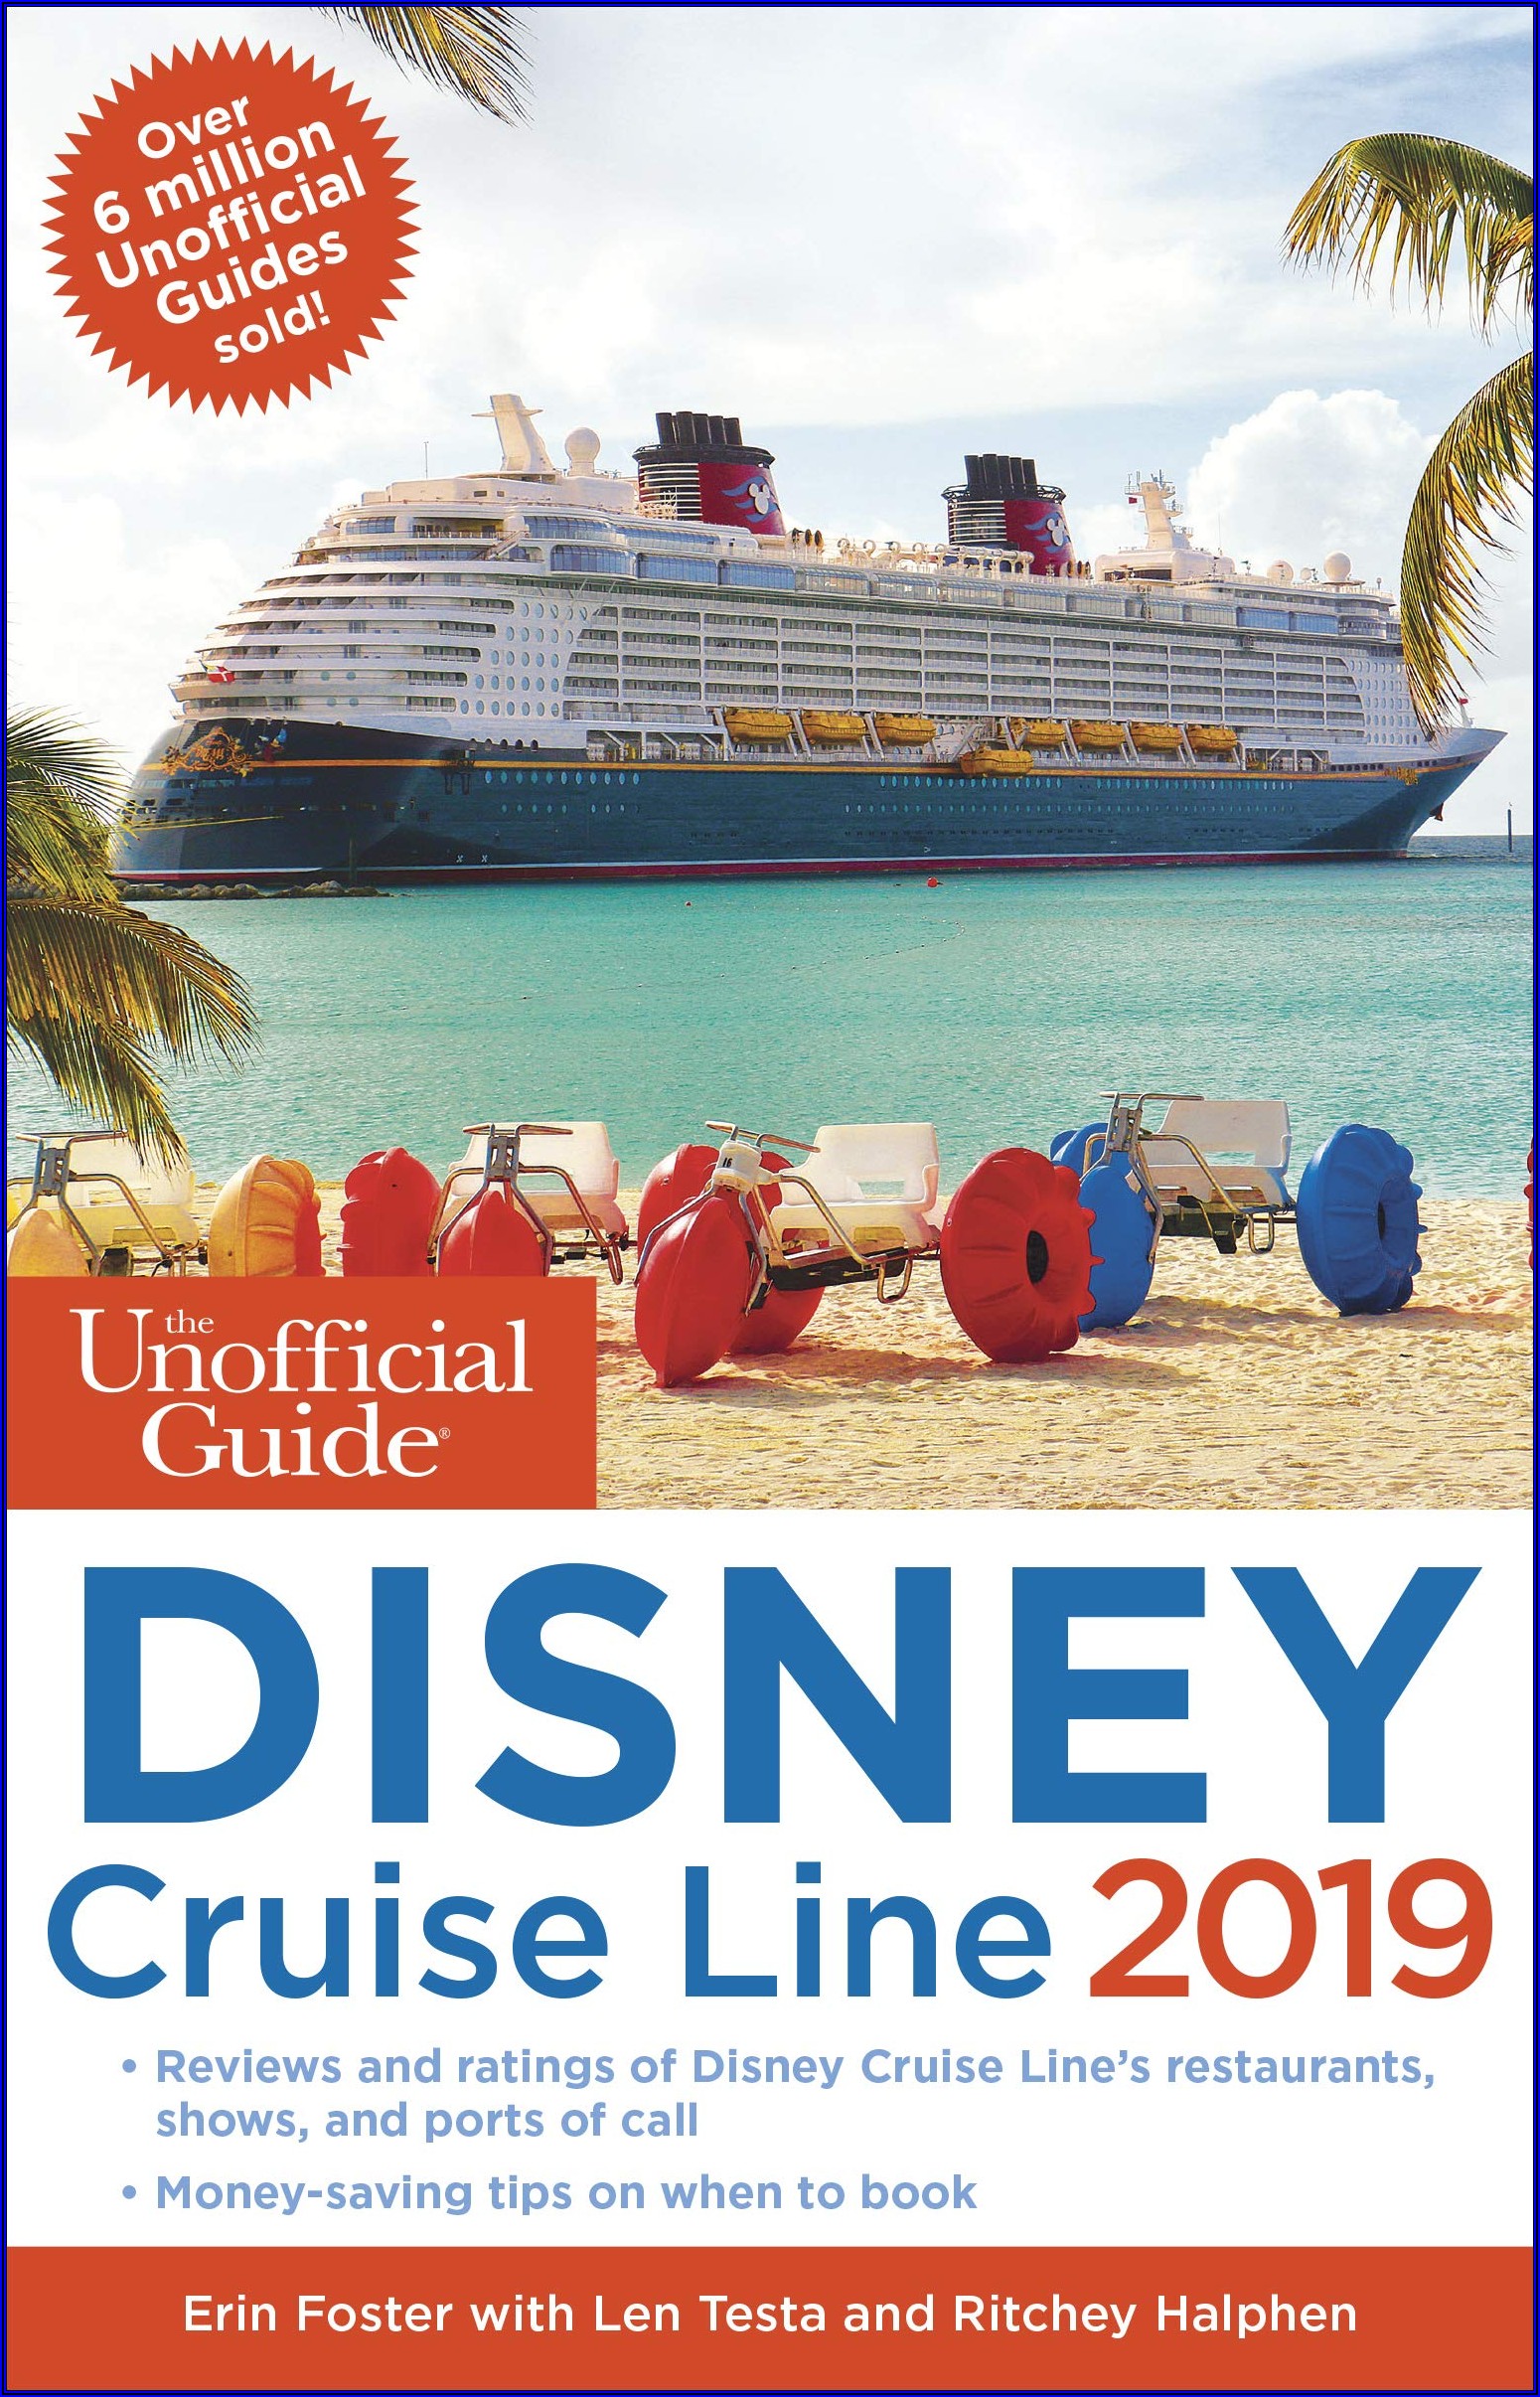 Disney Cruise Line Brochure Request